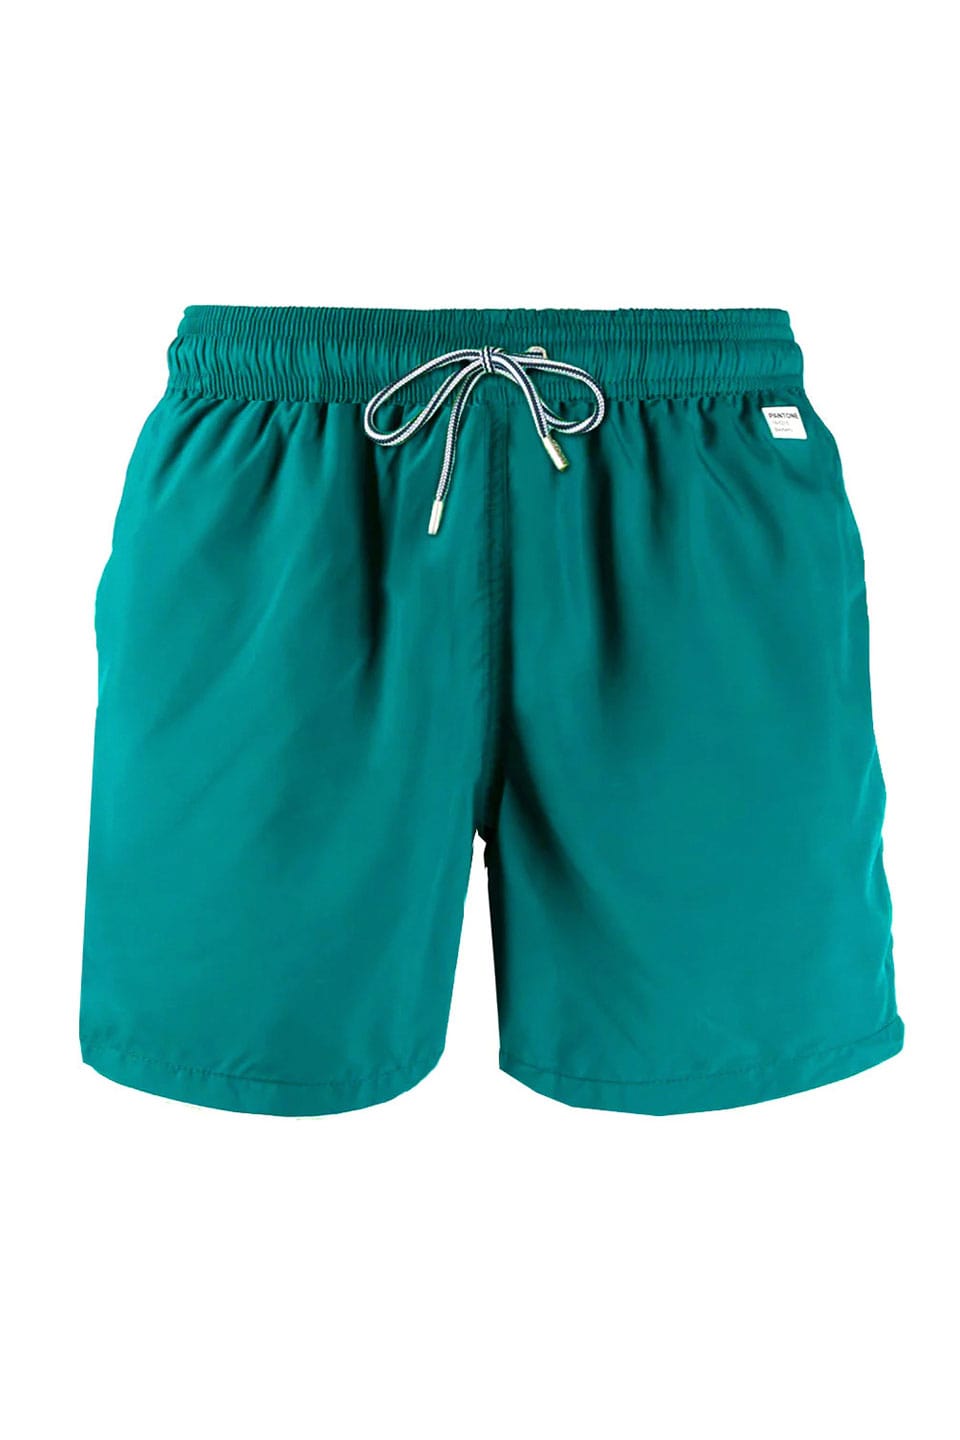 MC saint barth light fabric man british green swim shorts front